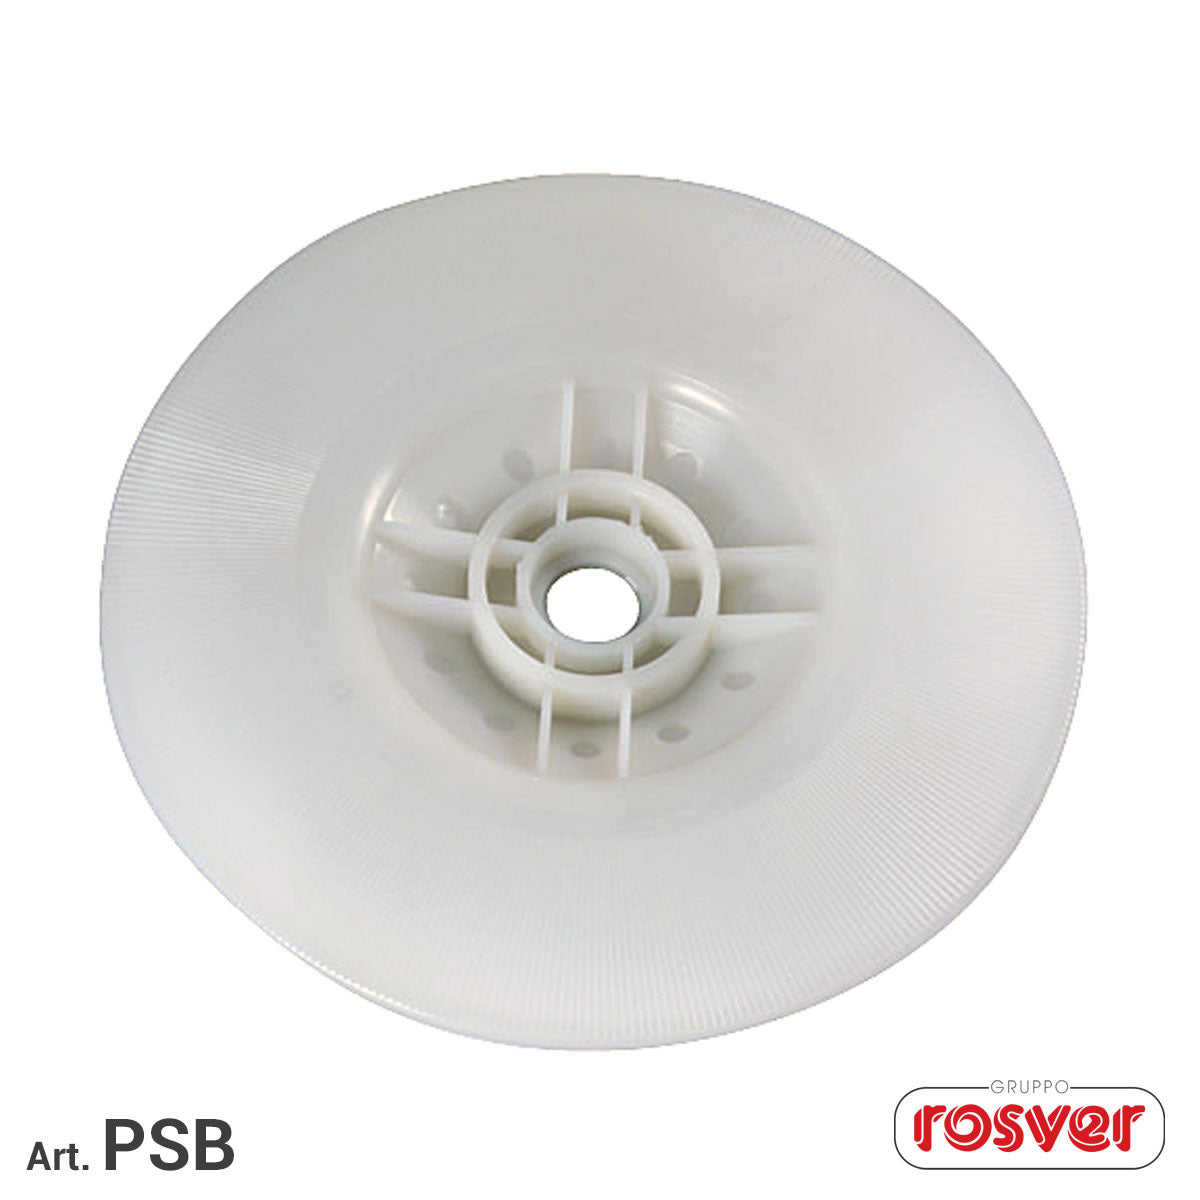 Disc holder pads - Rosver - PSB - Conf.1pz